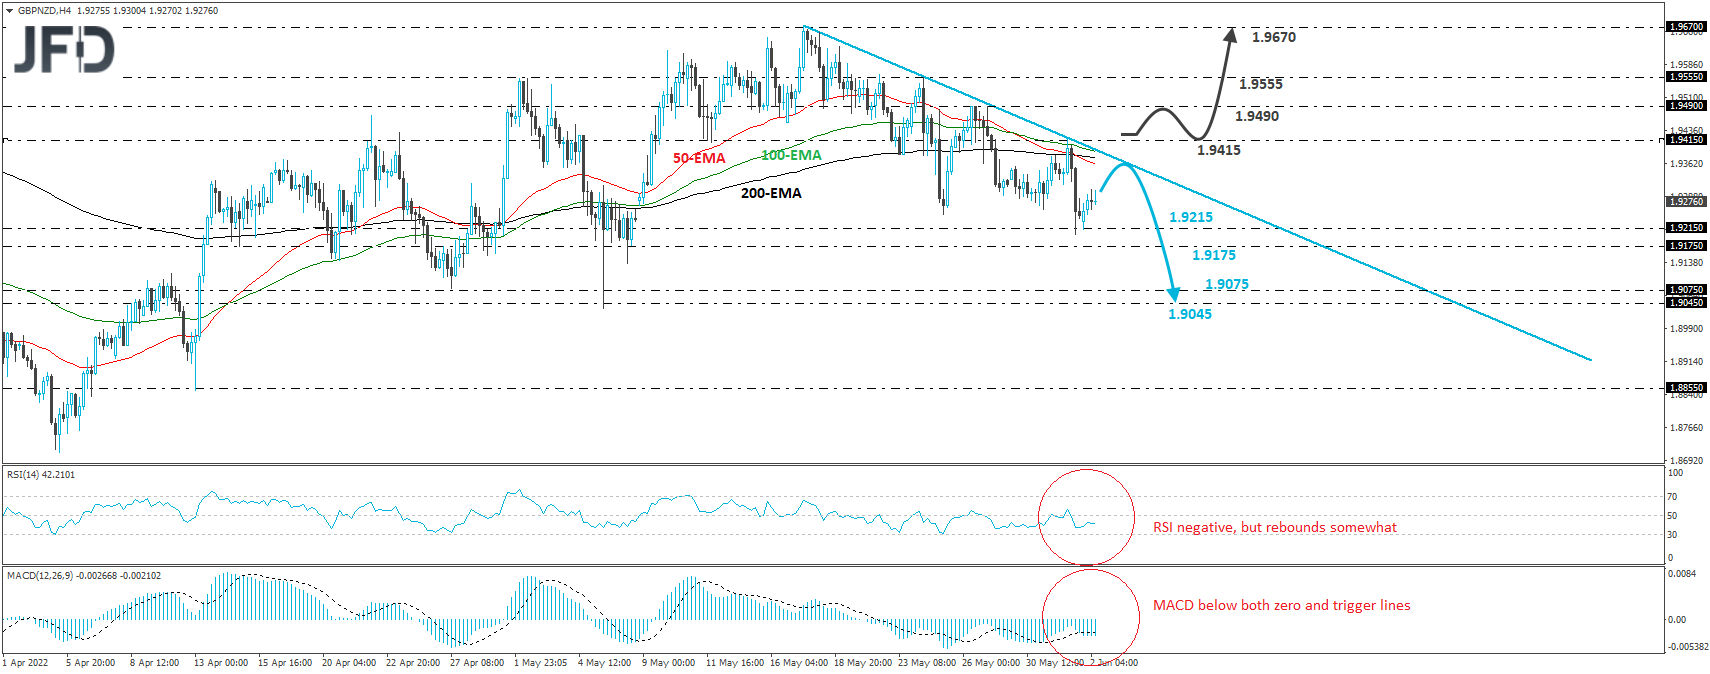 GBP/NZD 4-hour chart technical analysis.